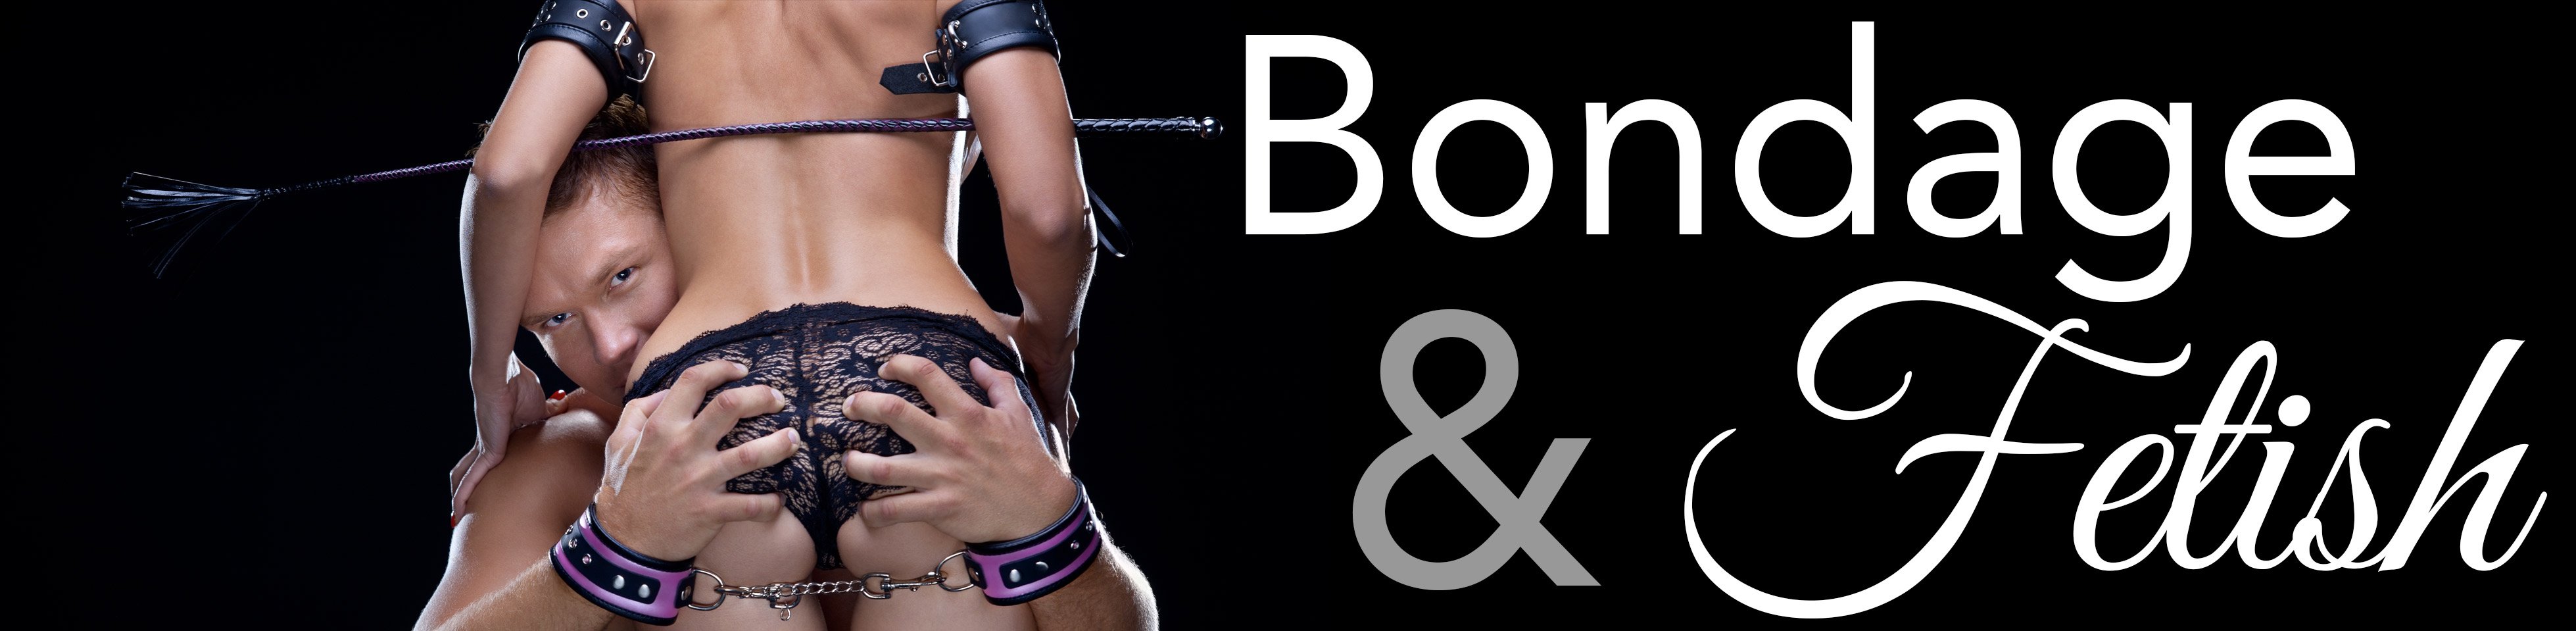 Bondage Fetish Apparel Header image